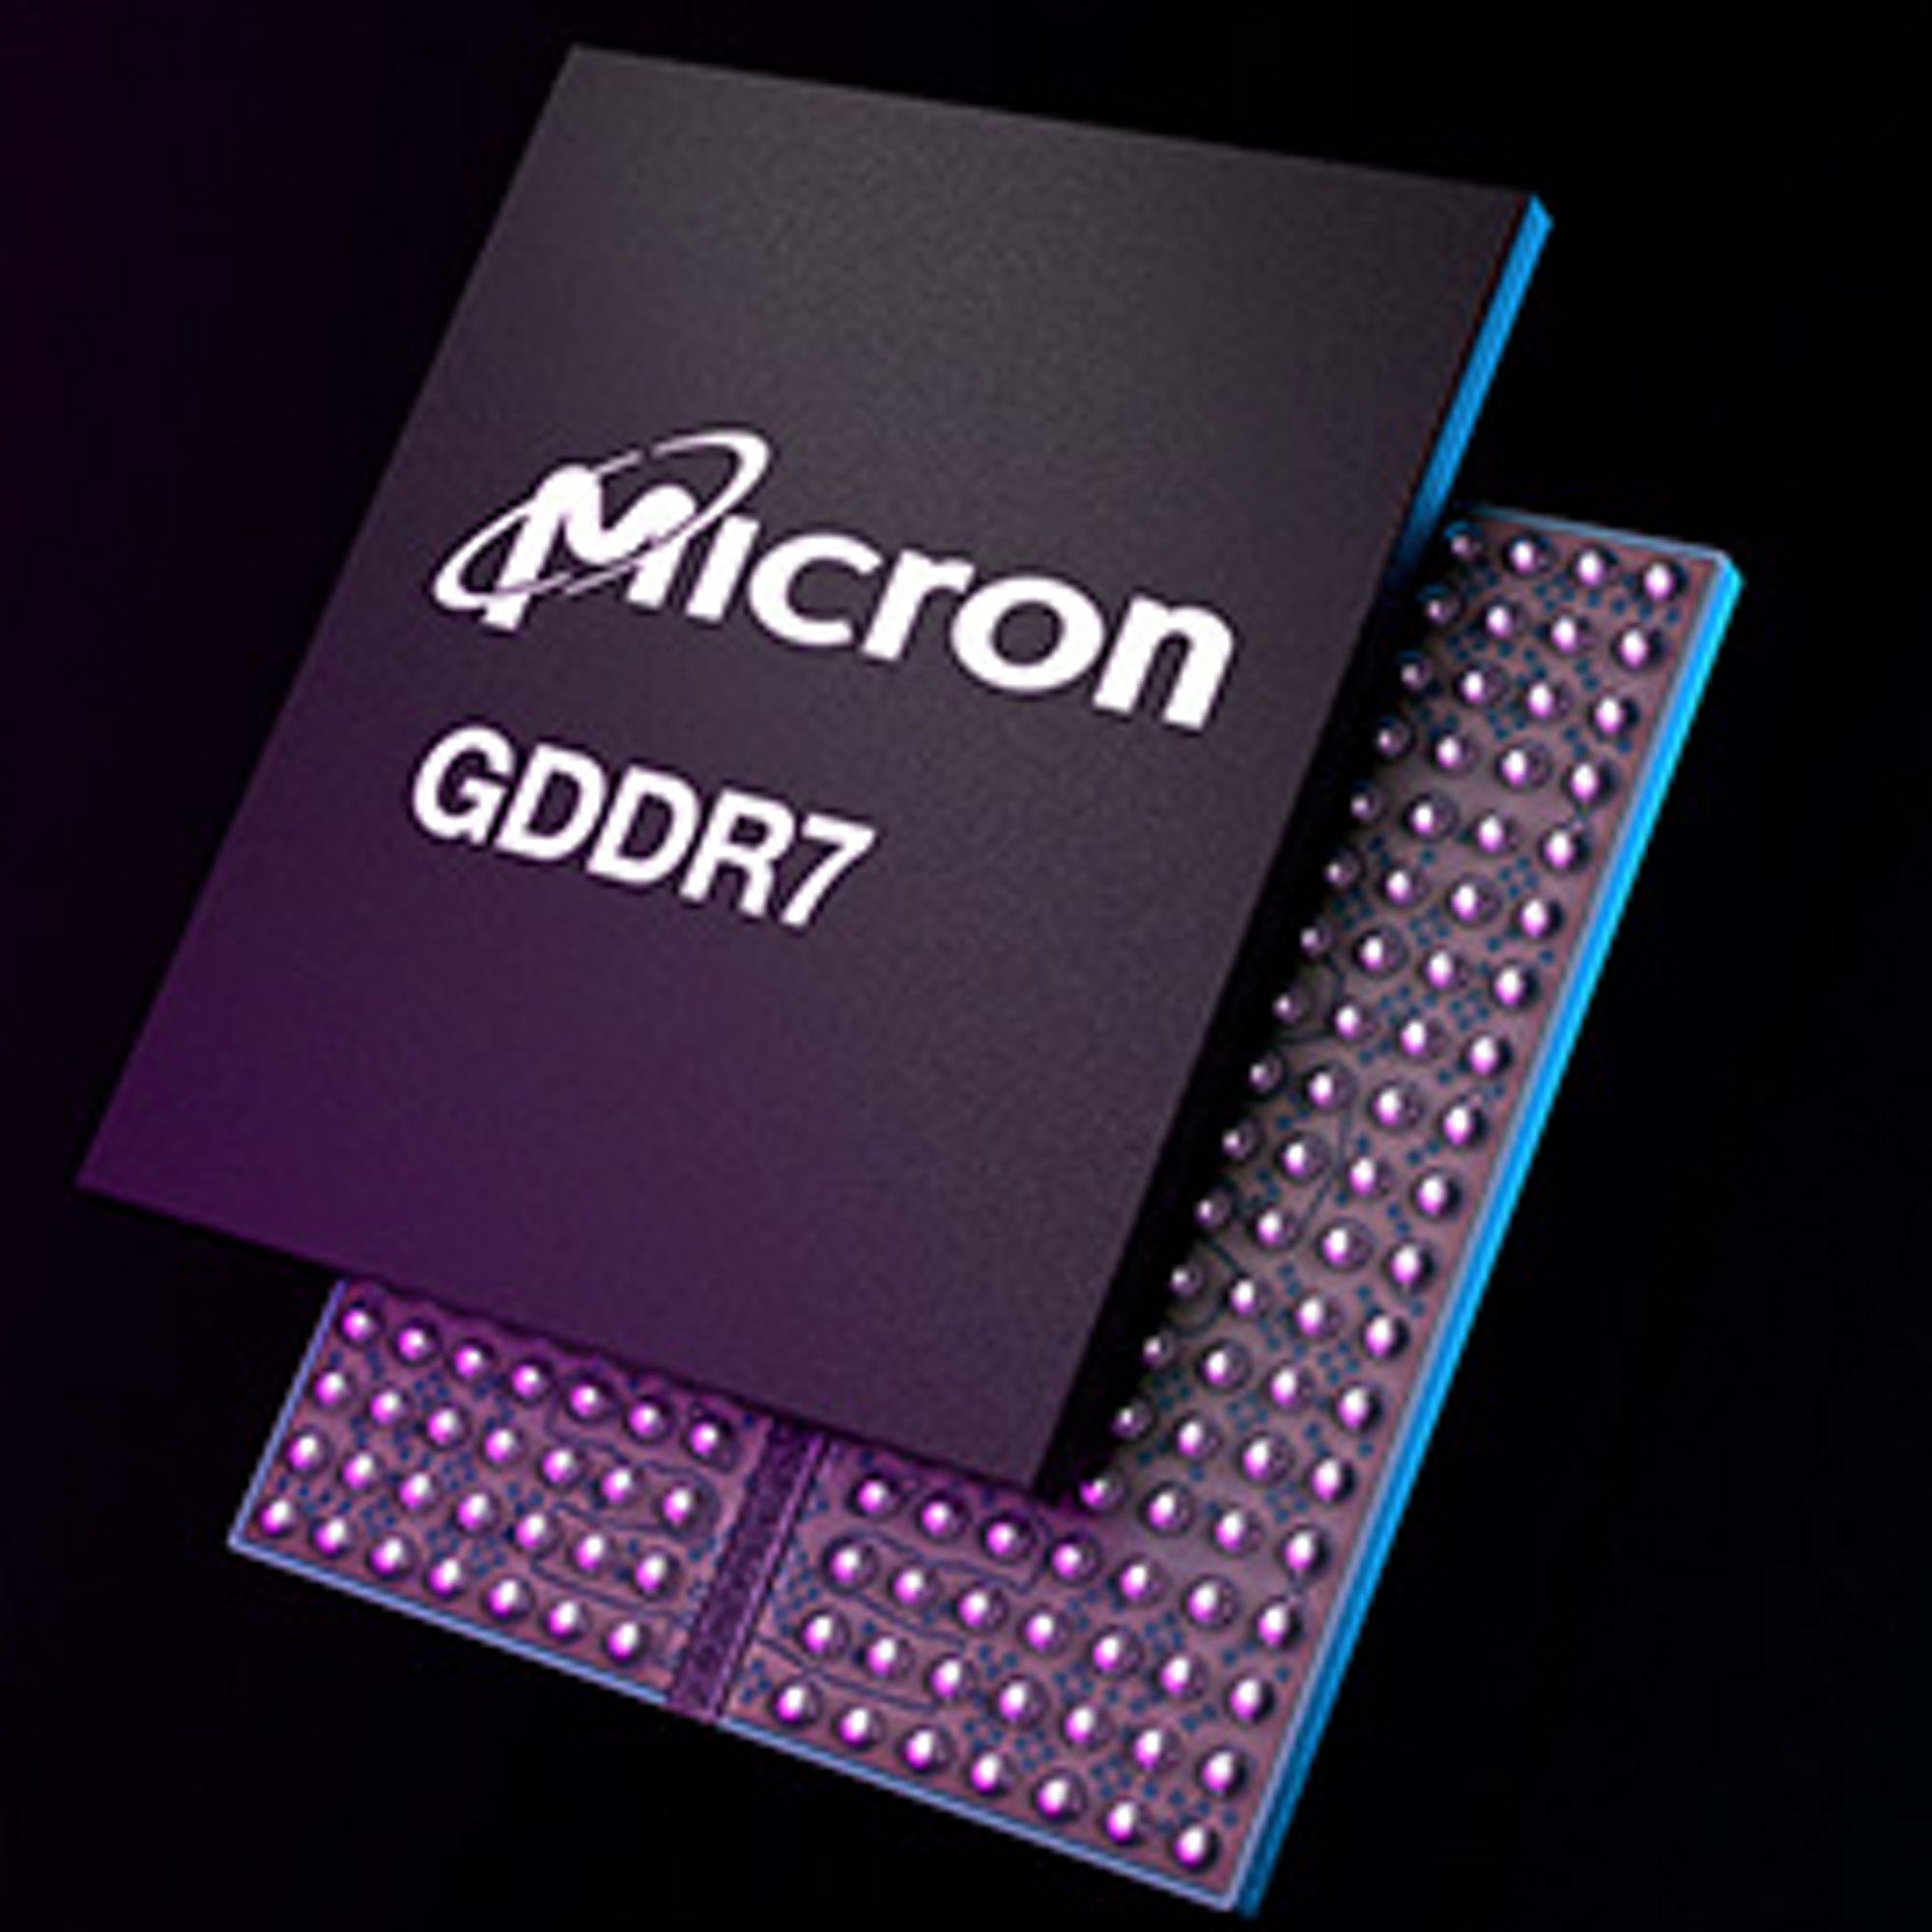 Micron GDDR7 chip